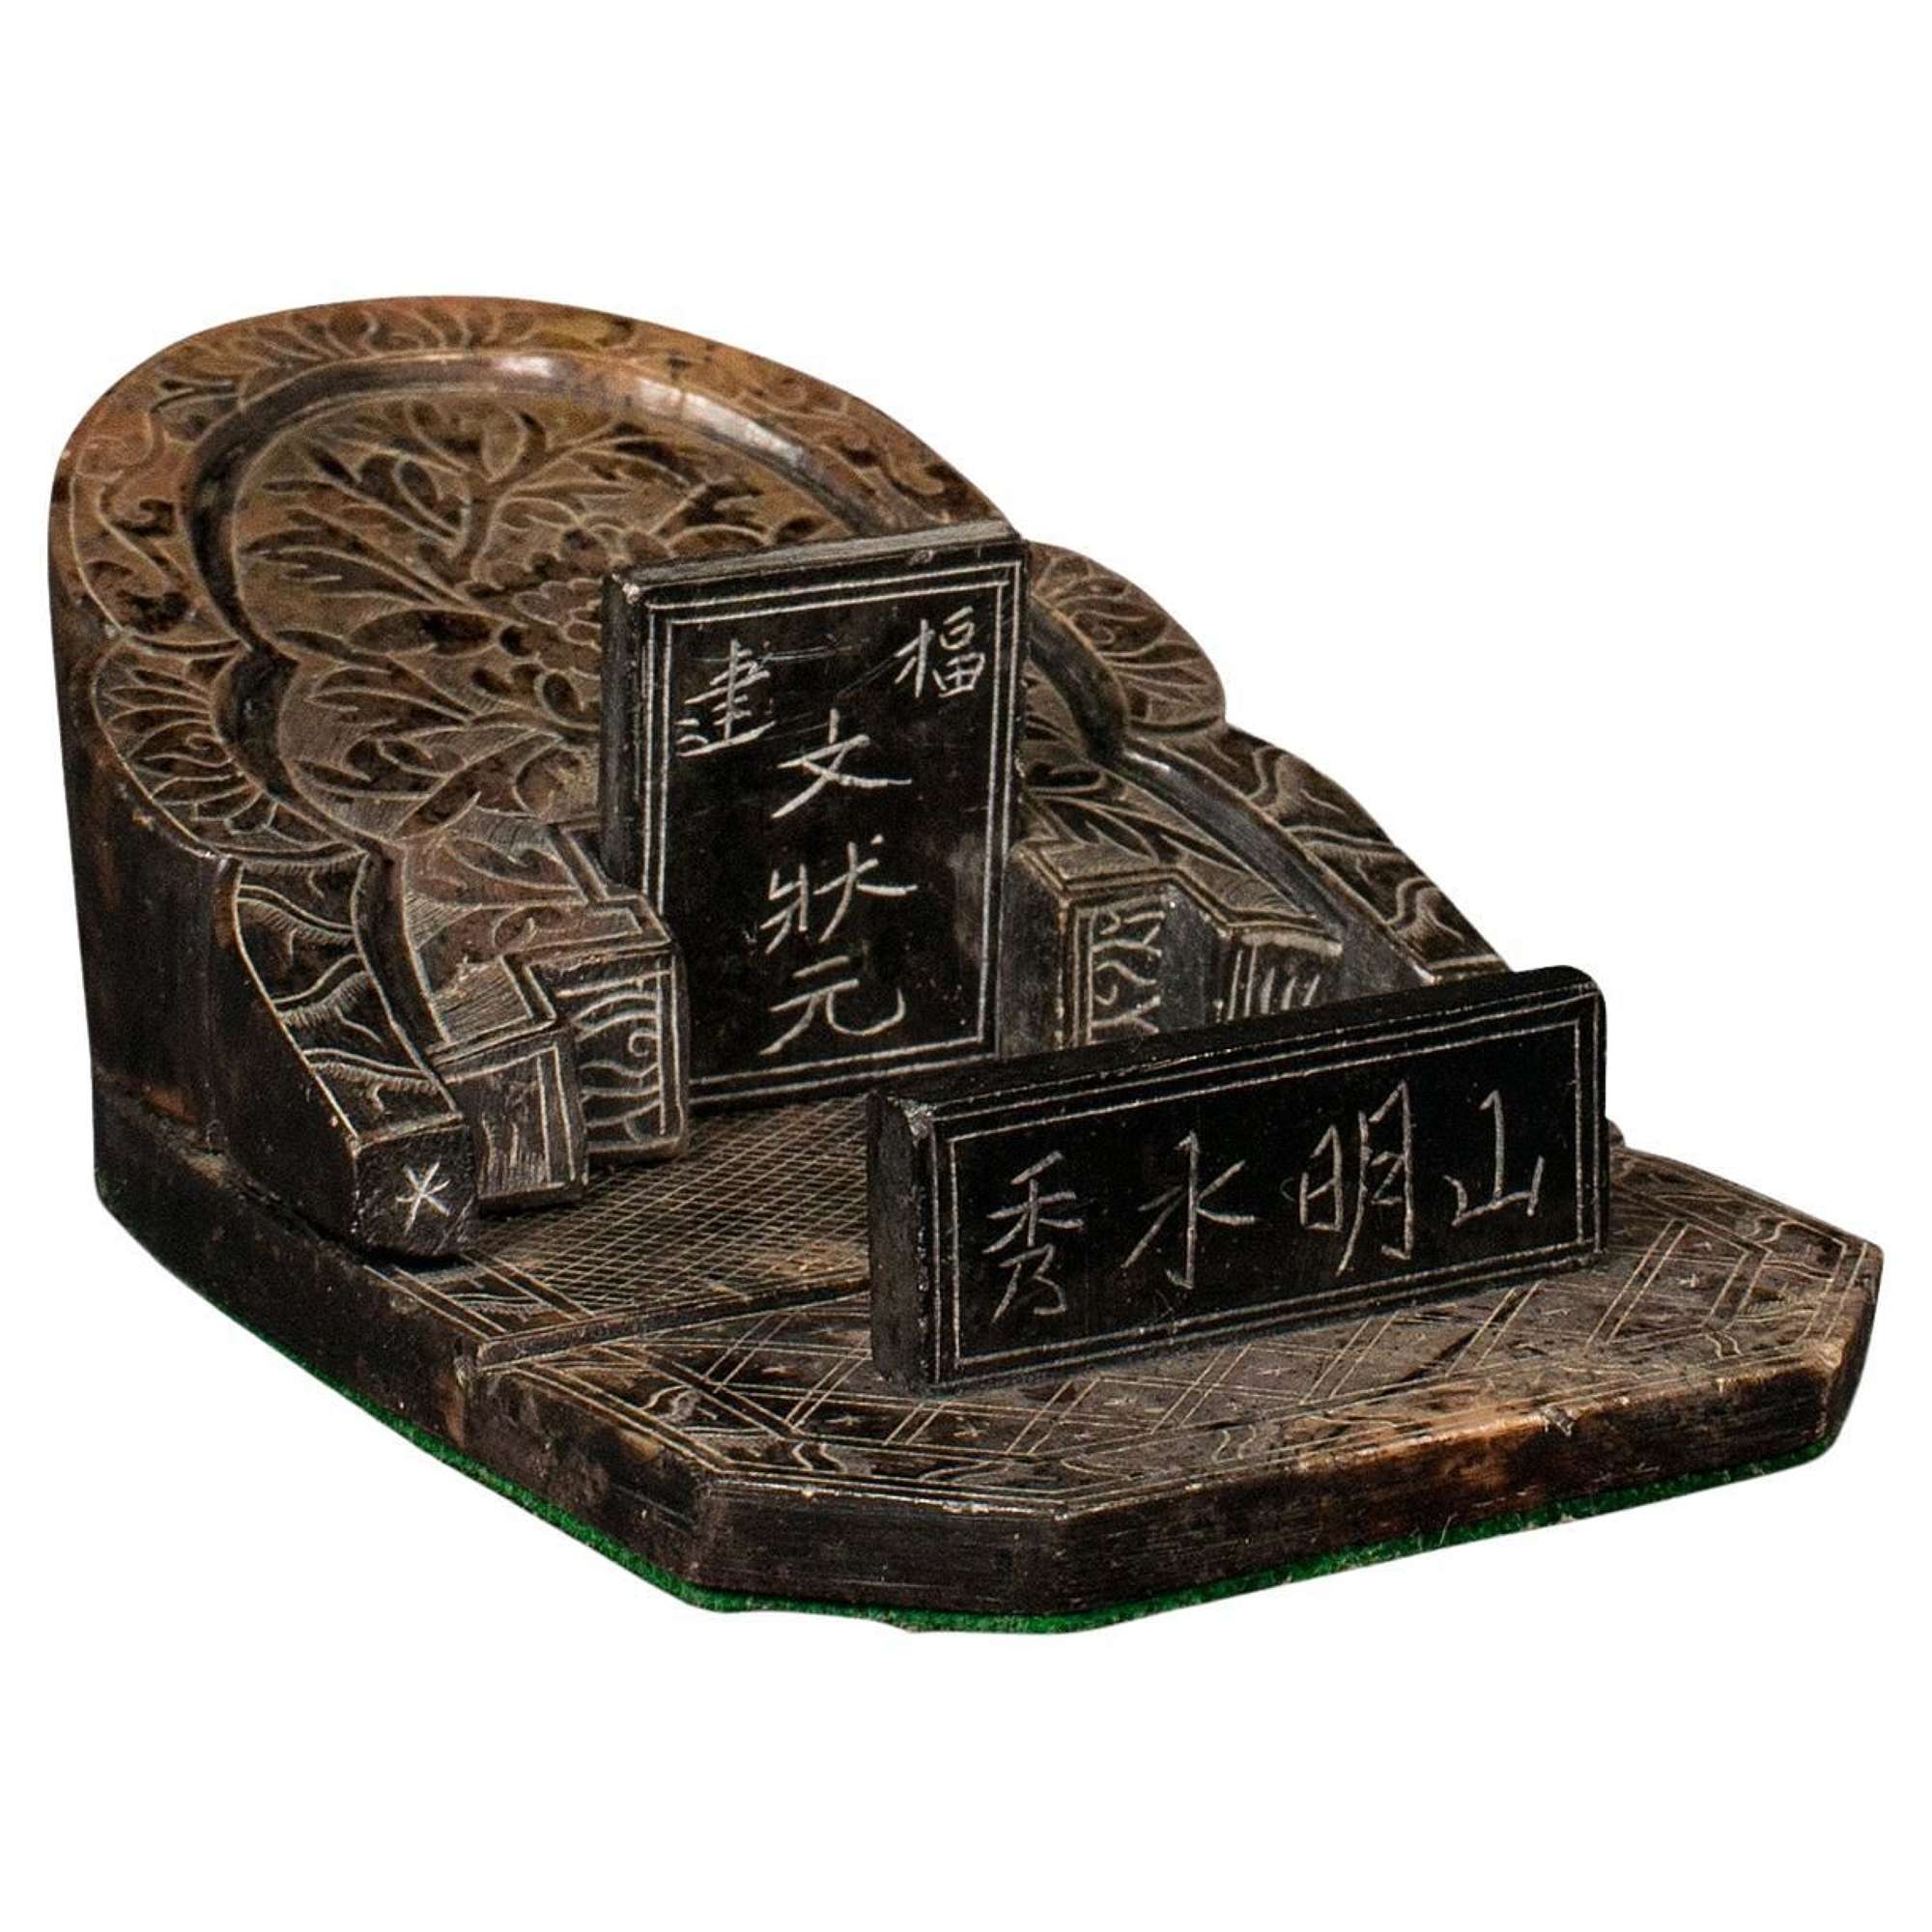 Antique Ornamental Mausoleum, Chinese Soapstone, Burial Memento, Victorian, 1900